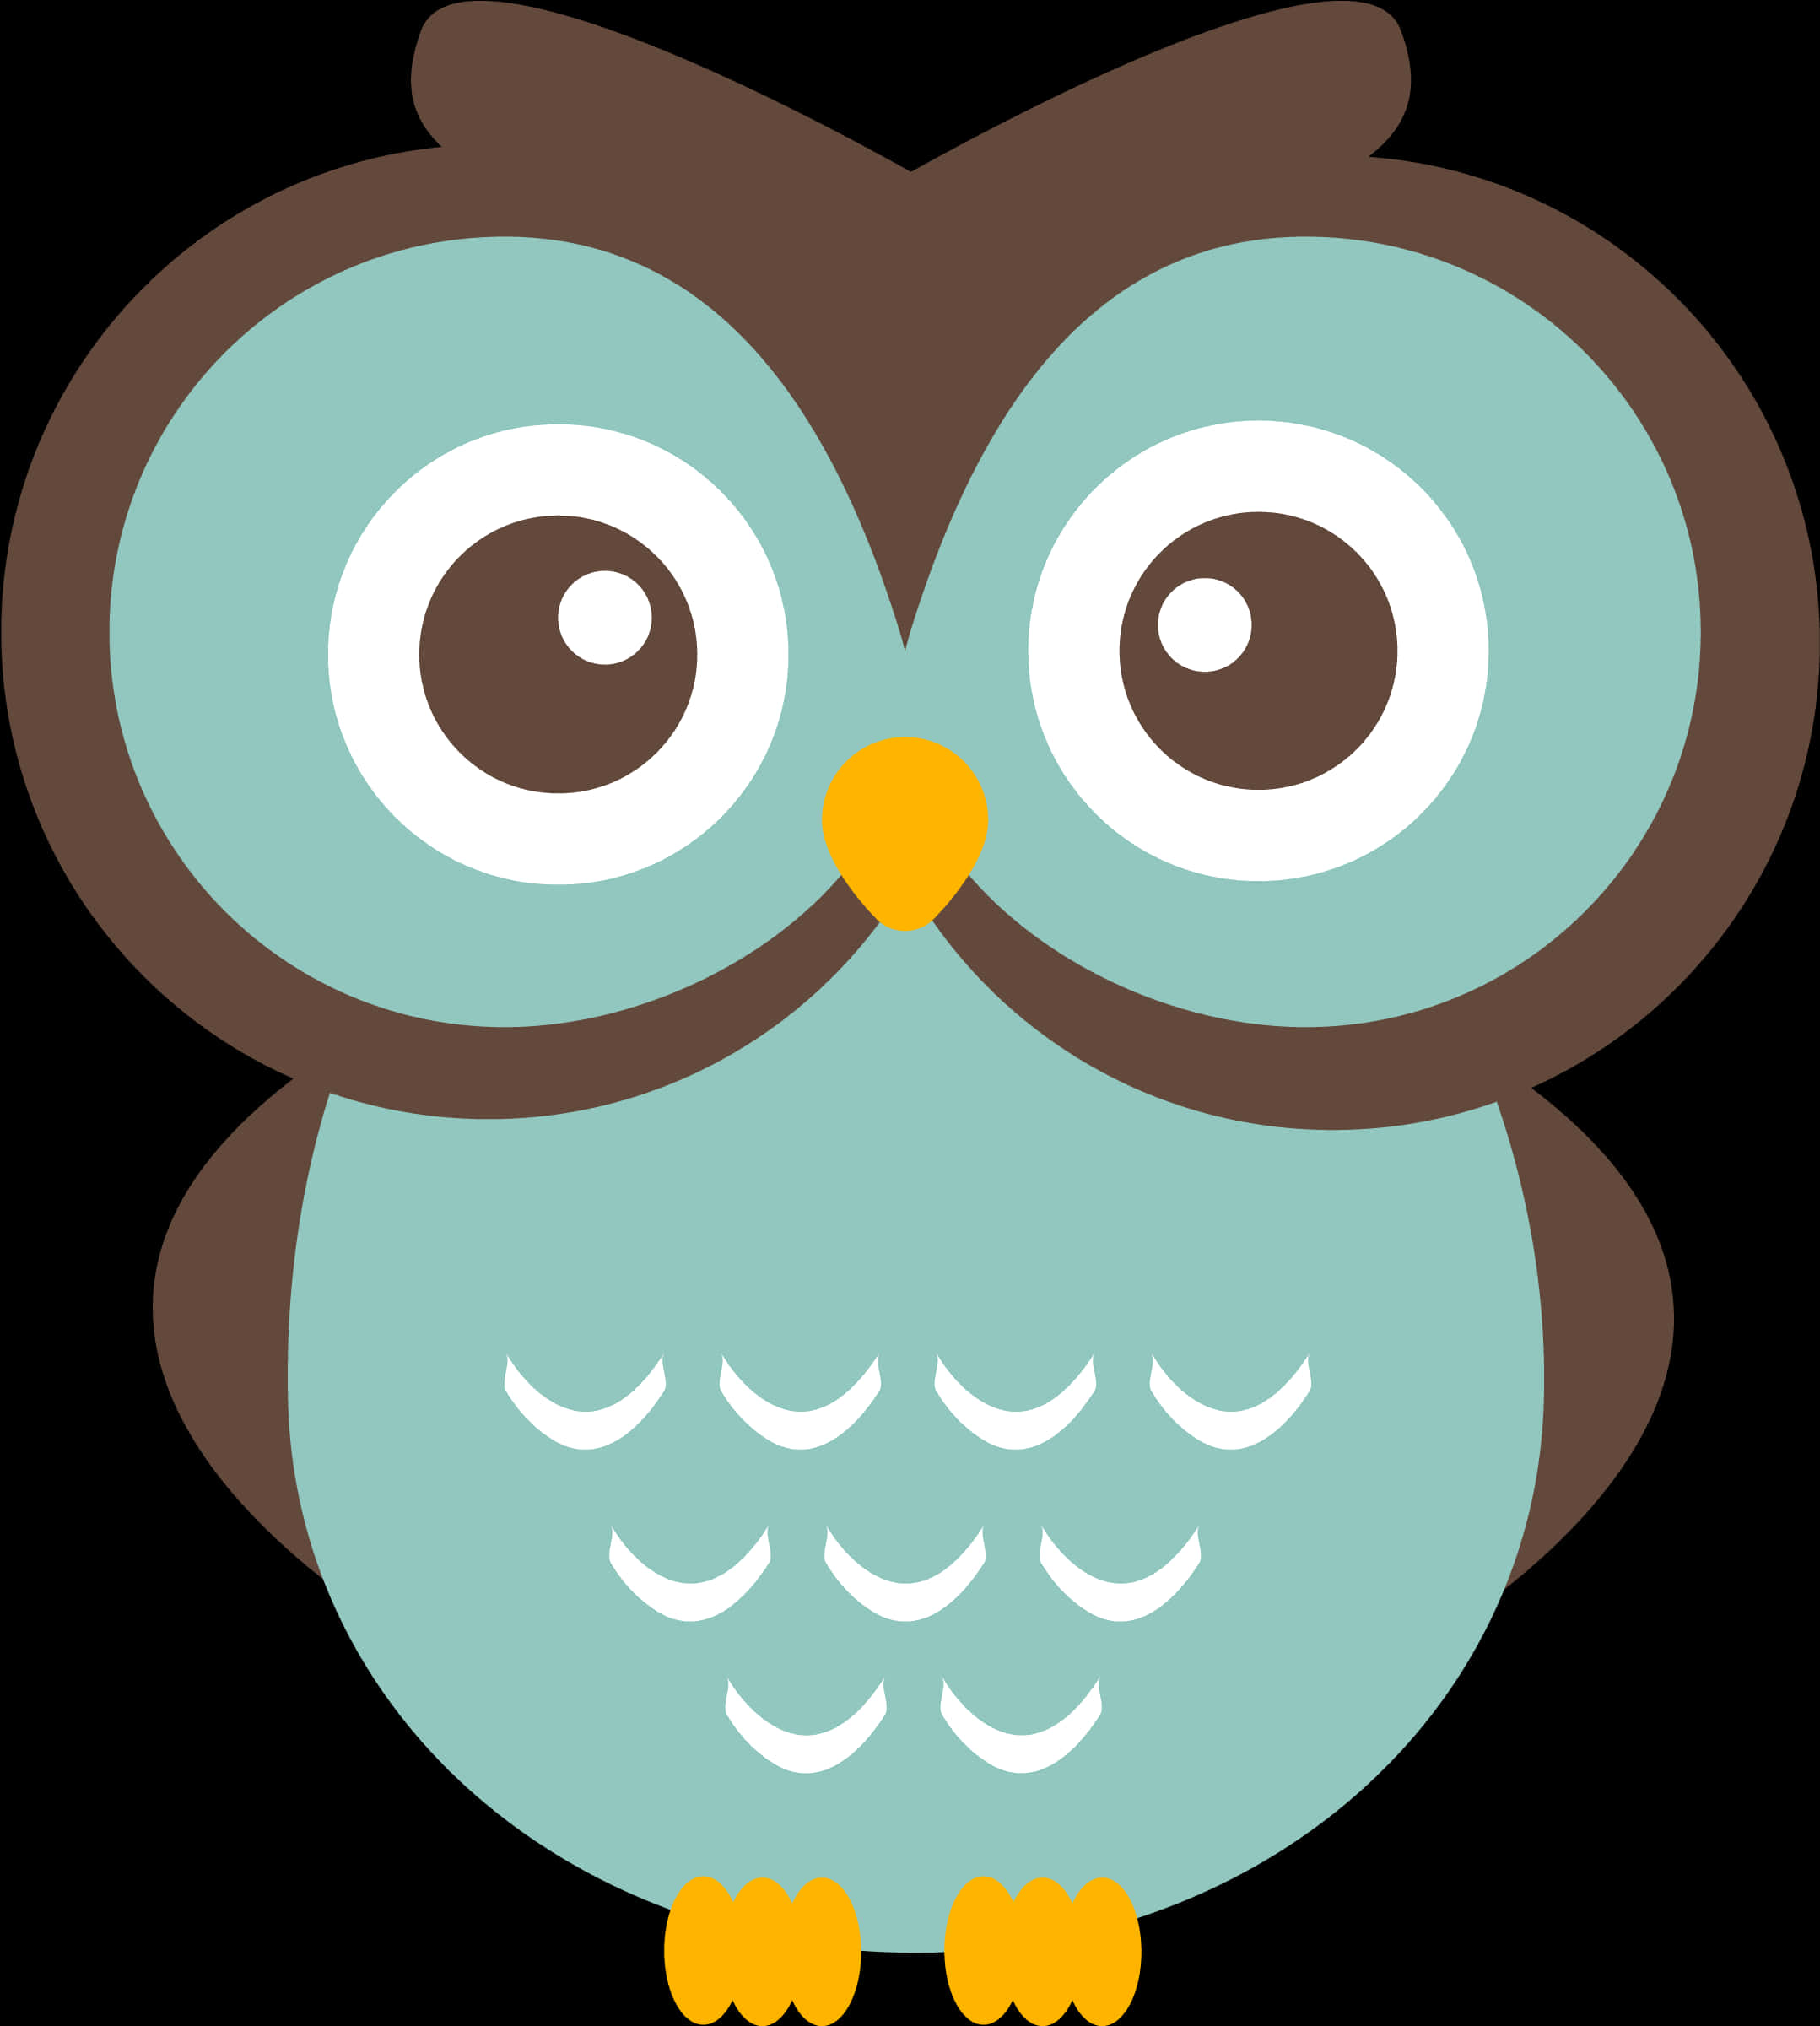 Cartoon Owl Illustration PNG image